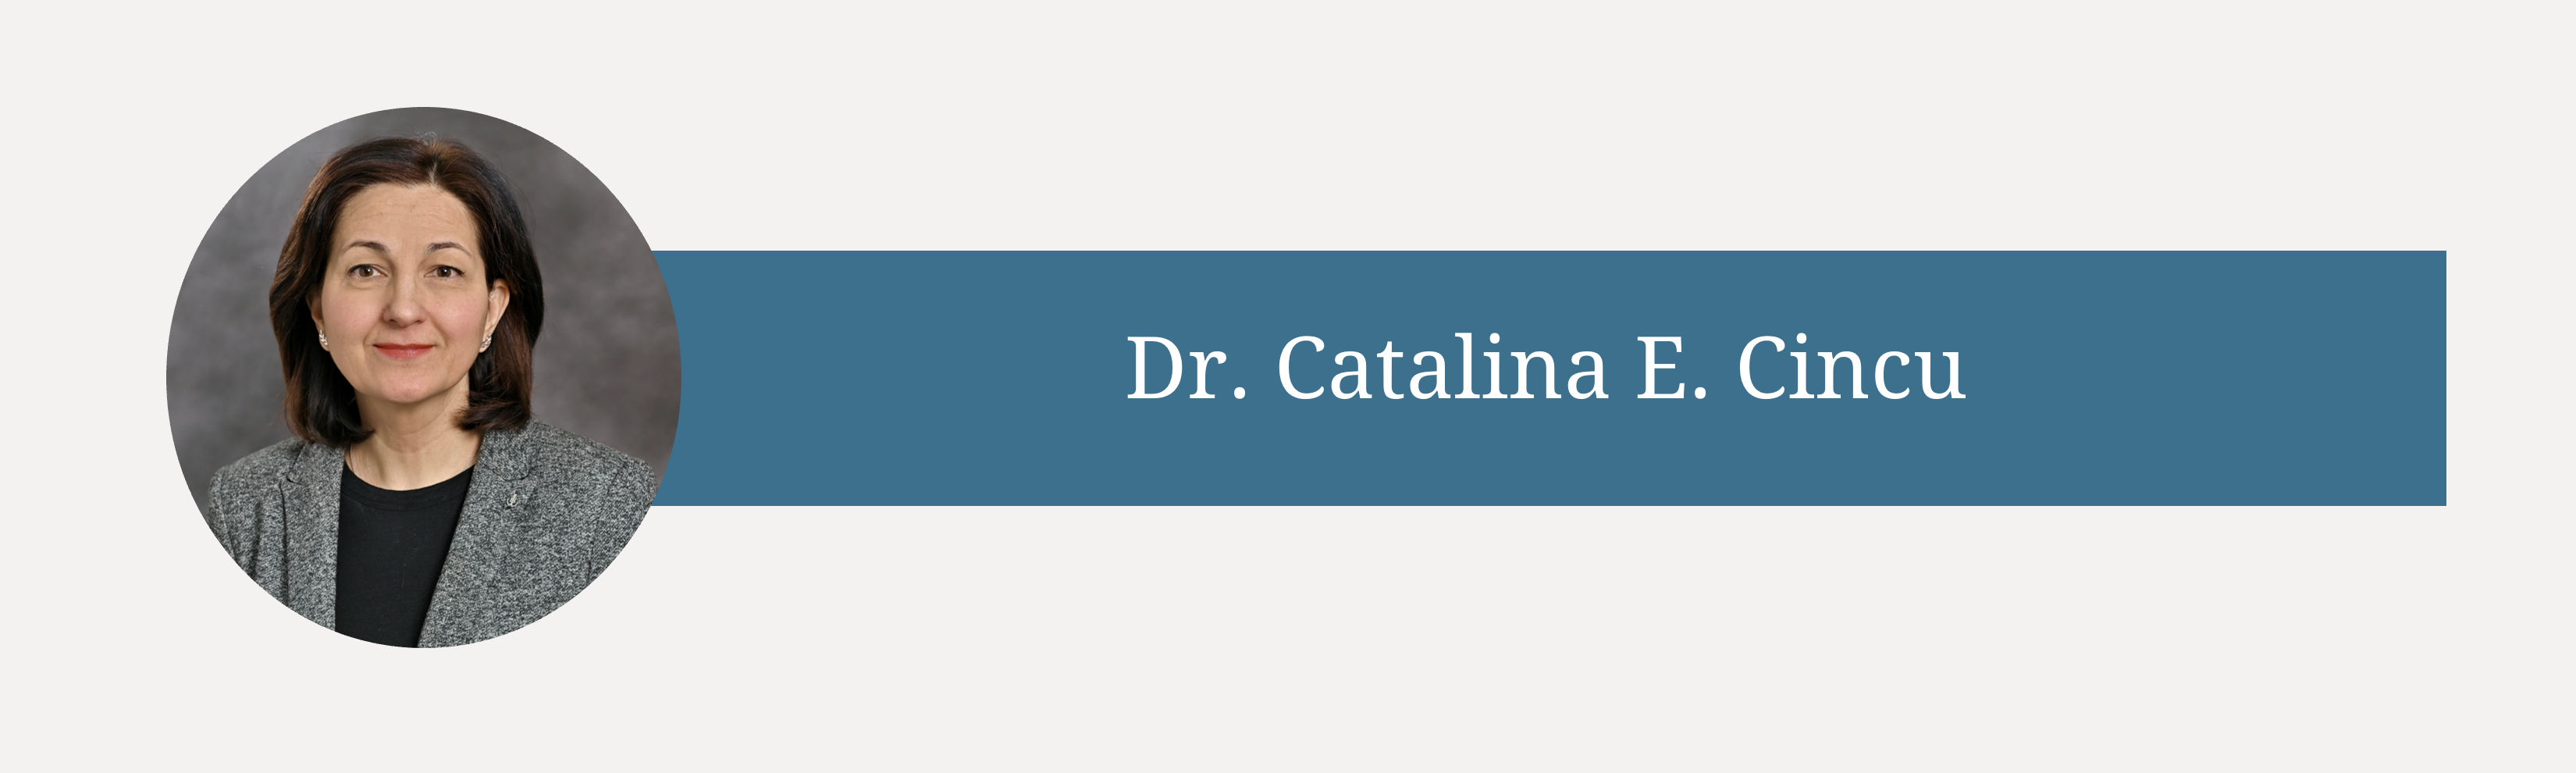 Internist Dr. Catalina E. Cincu Joins White Plains Hospital Physician Associates